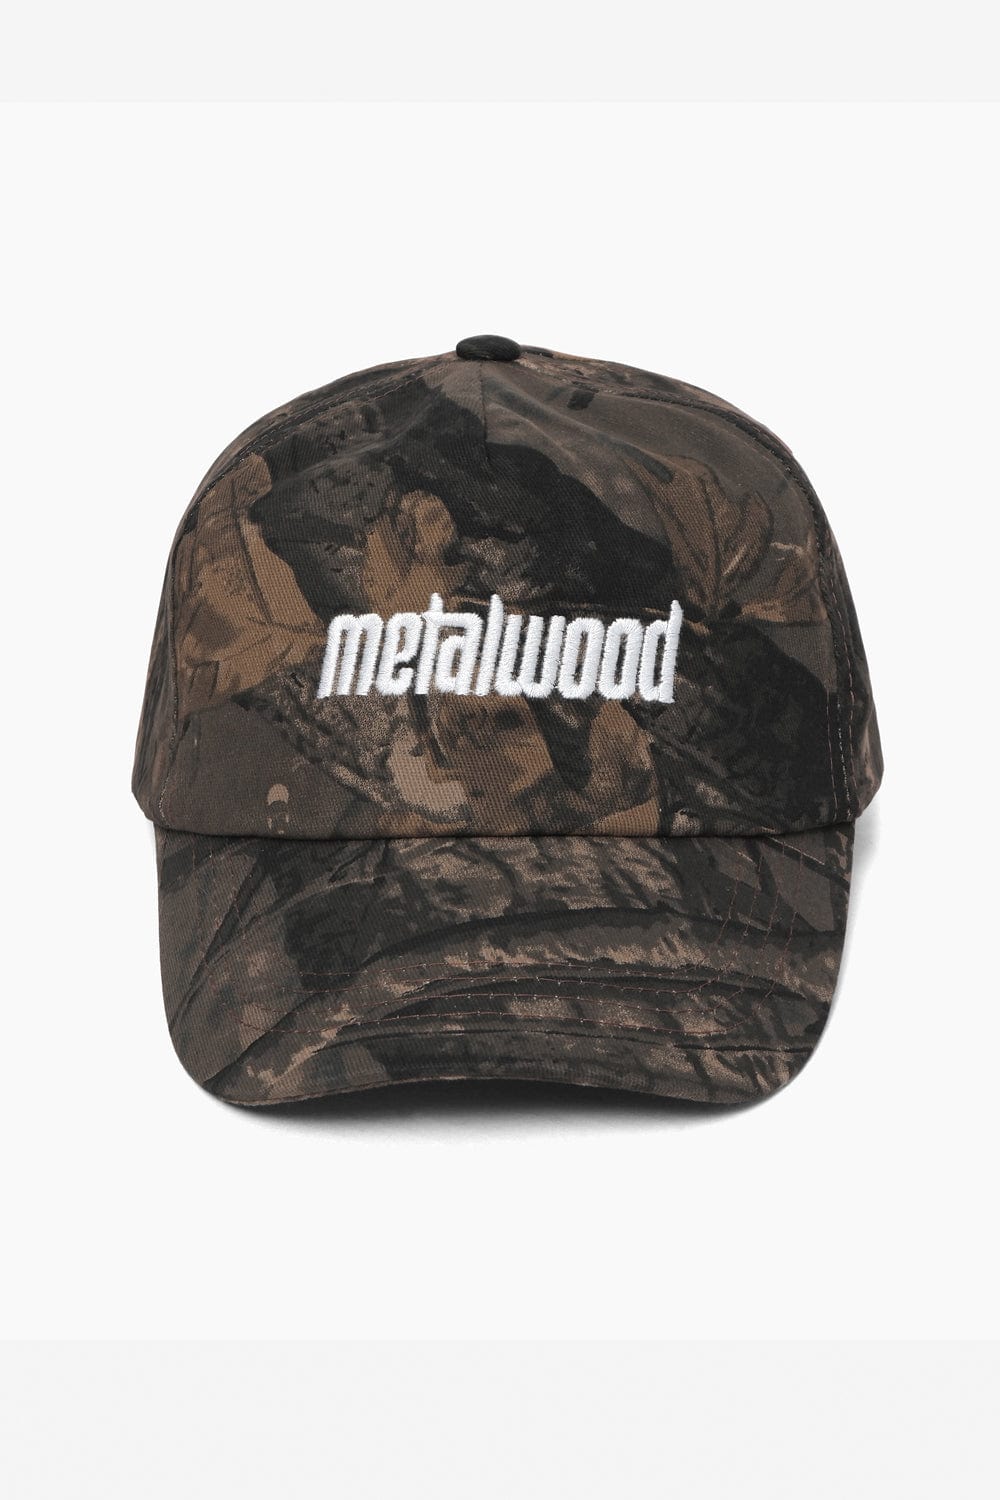 Metalwood Studio Metal Logo 5-Panel Hat (Real Leaf Camo)